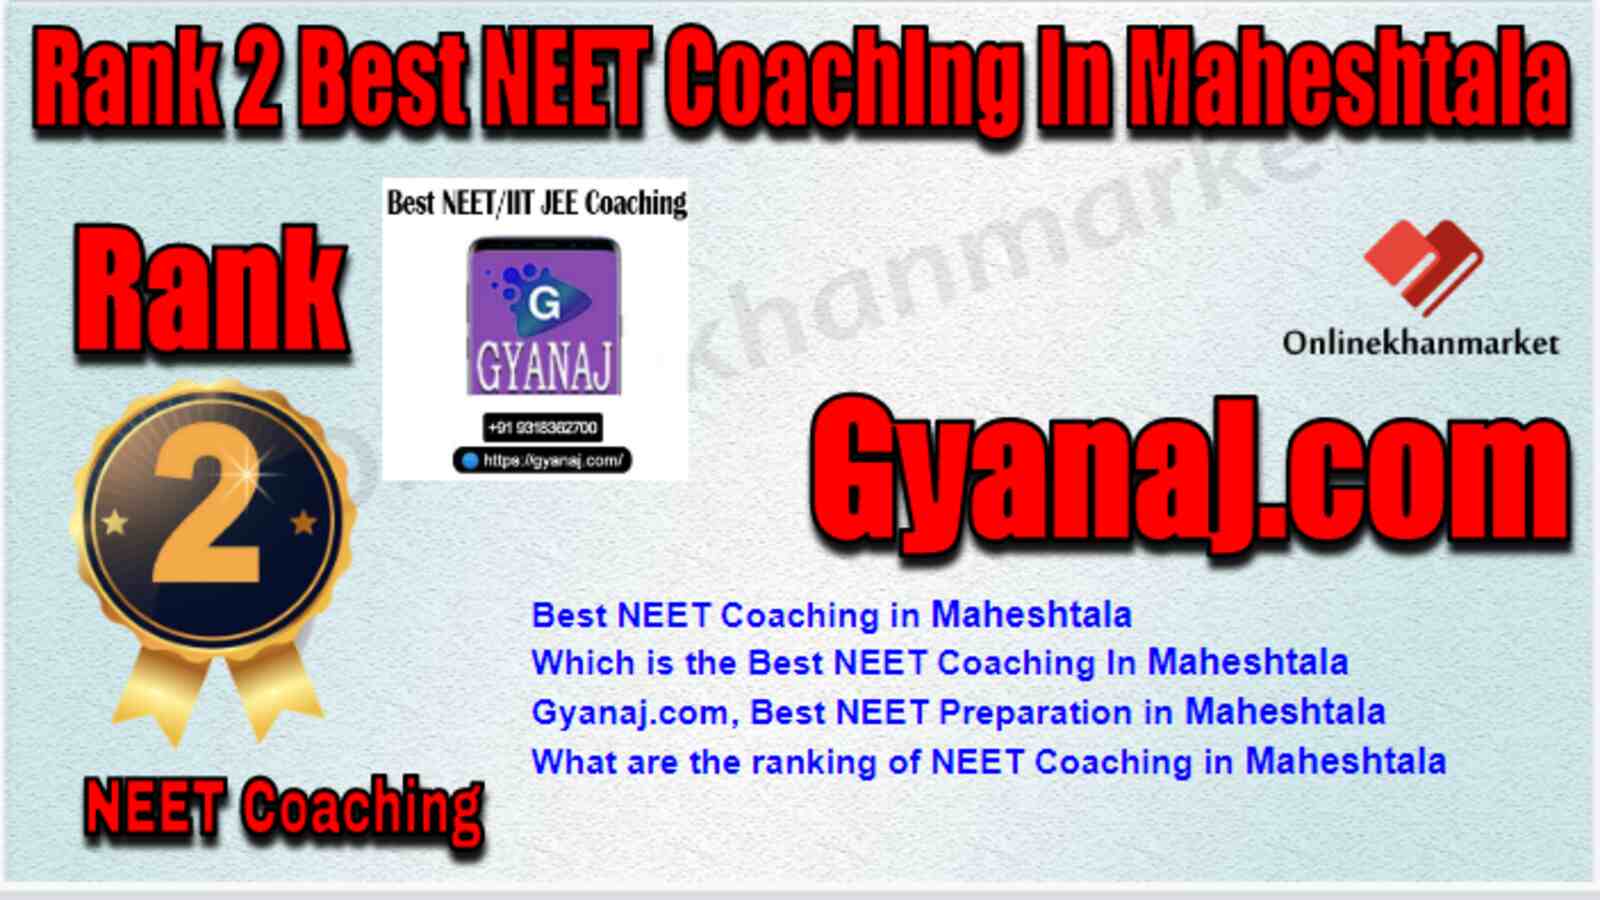 Rank 2 Best NEET Coaching in Maheshtala